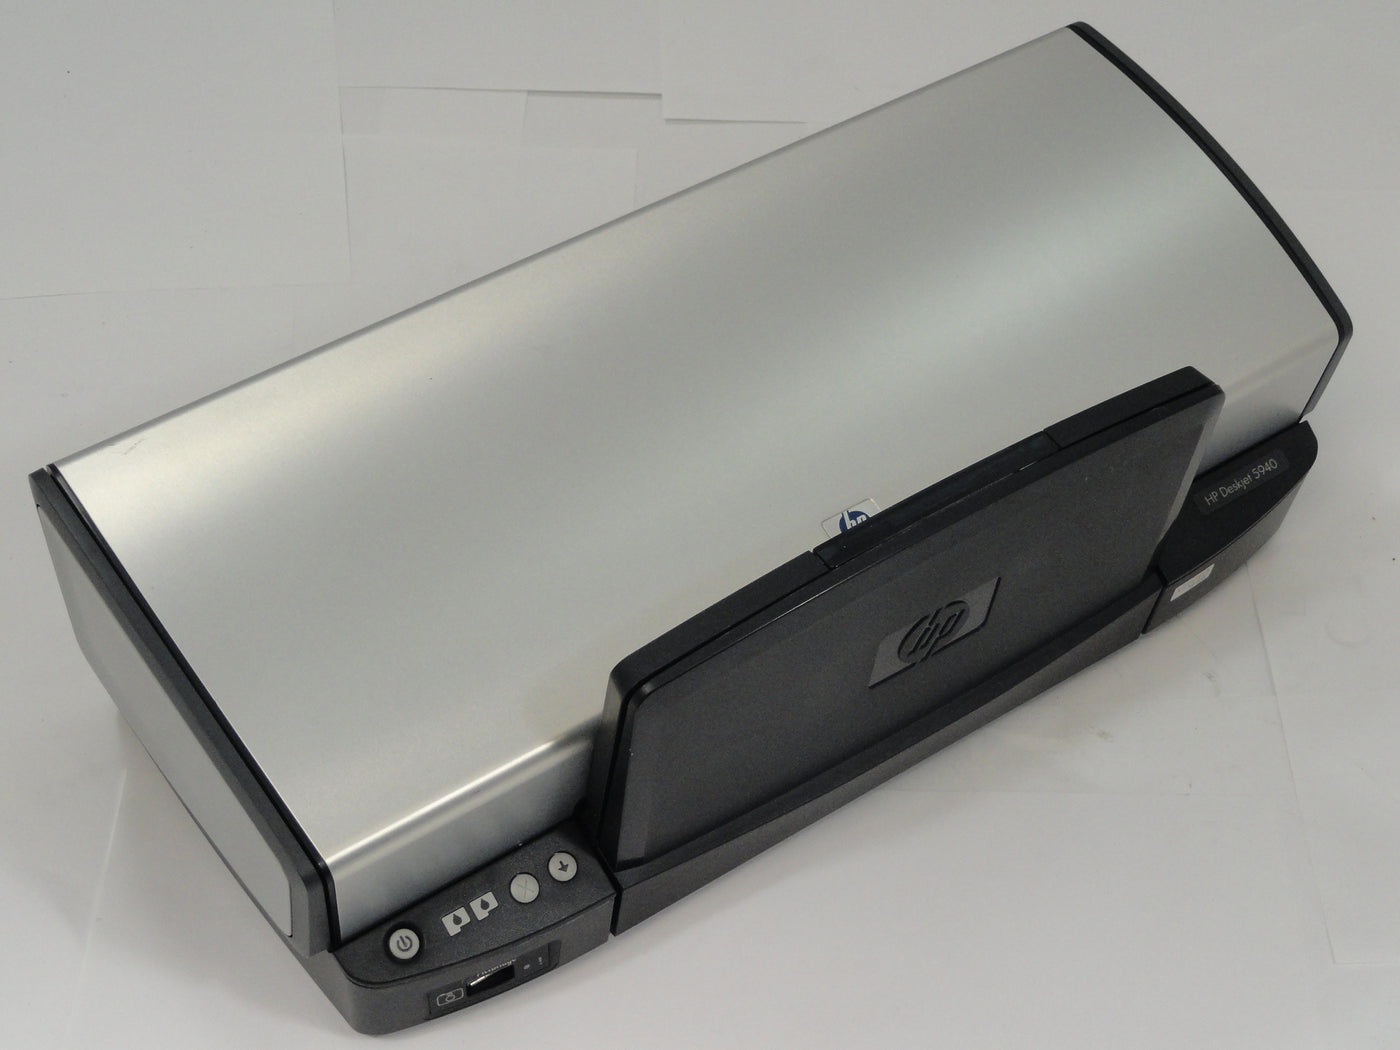 C9017B - HP DeskJet 5940 Colour Inkjet Printer With PictBridge USB Direct Printing - Refurbished